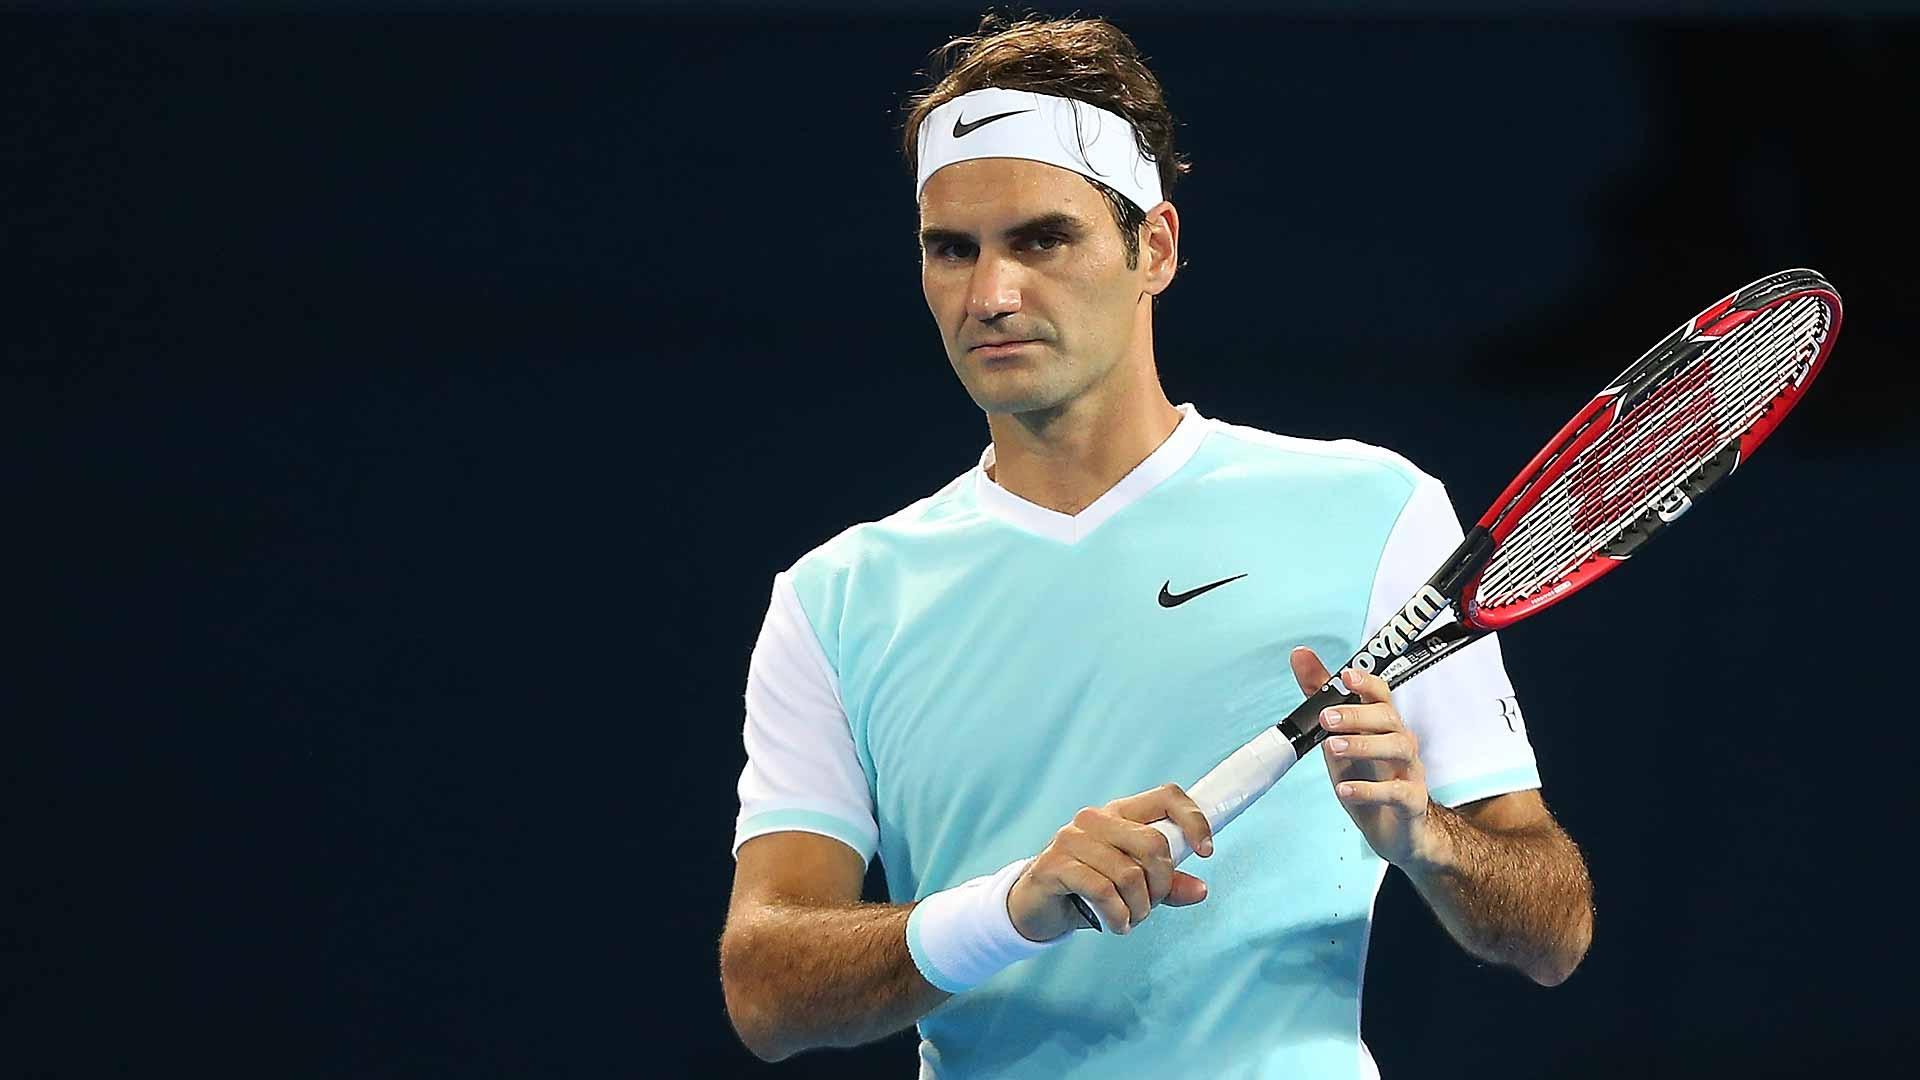 Great tennis player Roger Federer wallpaper. HD Wallpaper Rocks